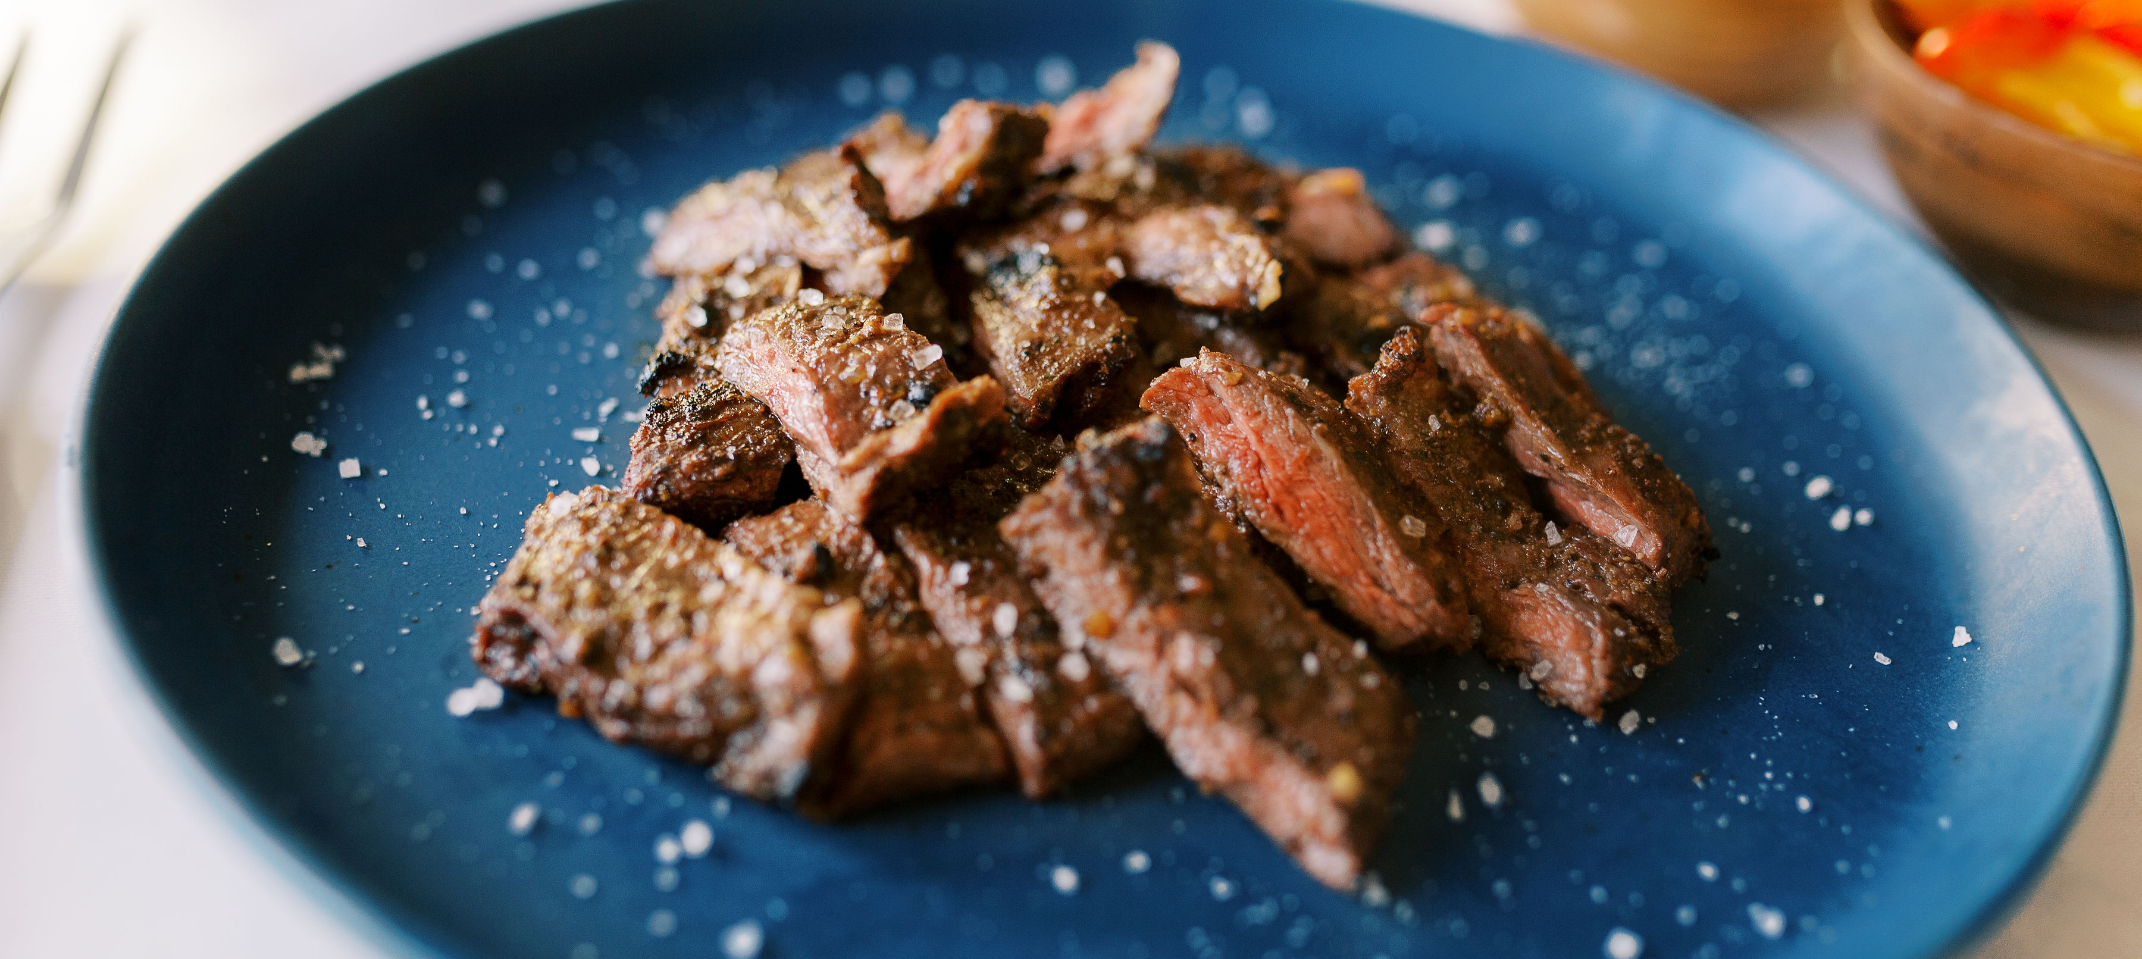 Sliced cooked Pasture-raised steak on a blue plate